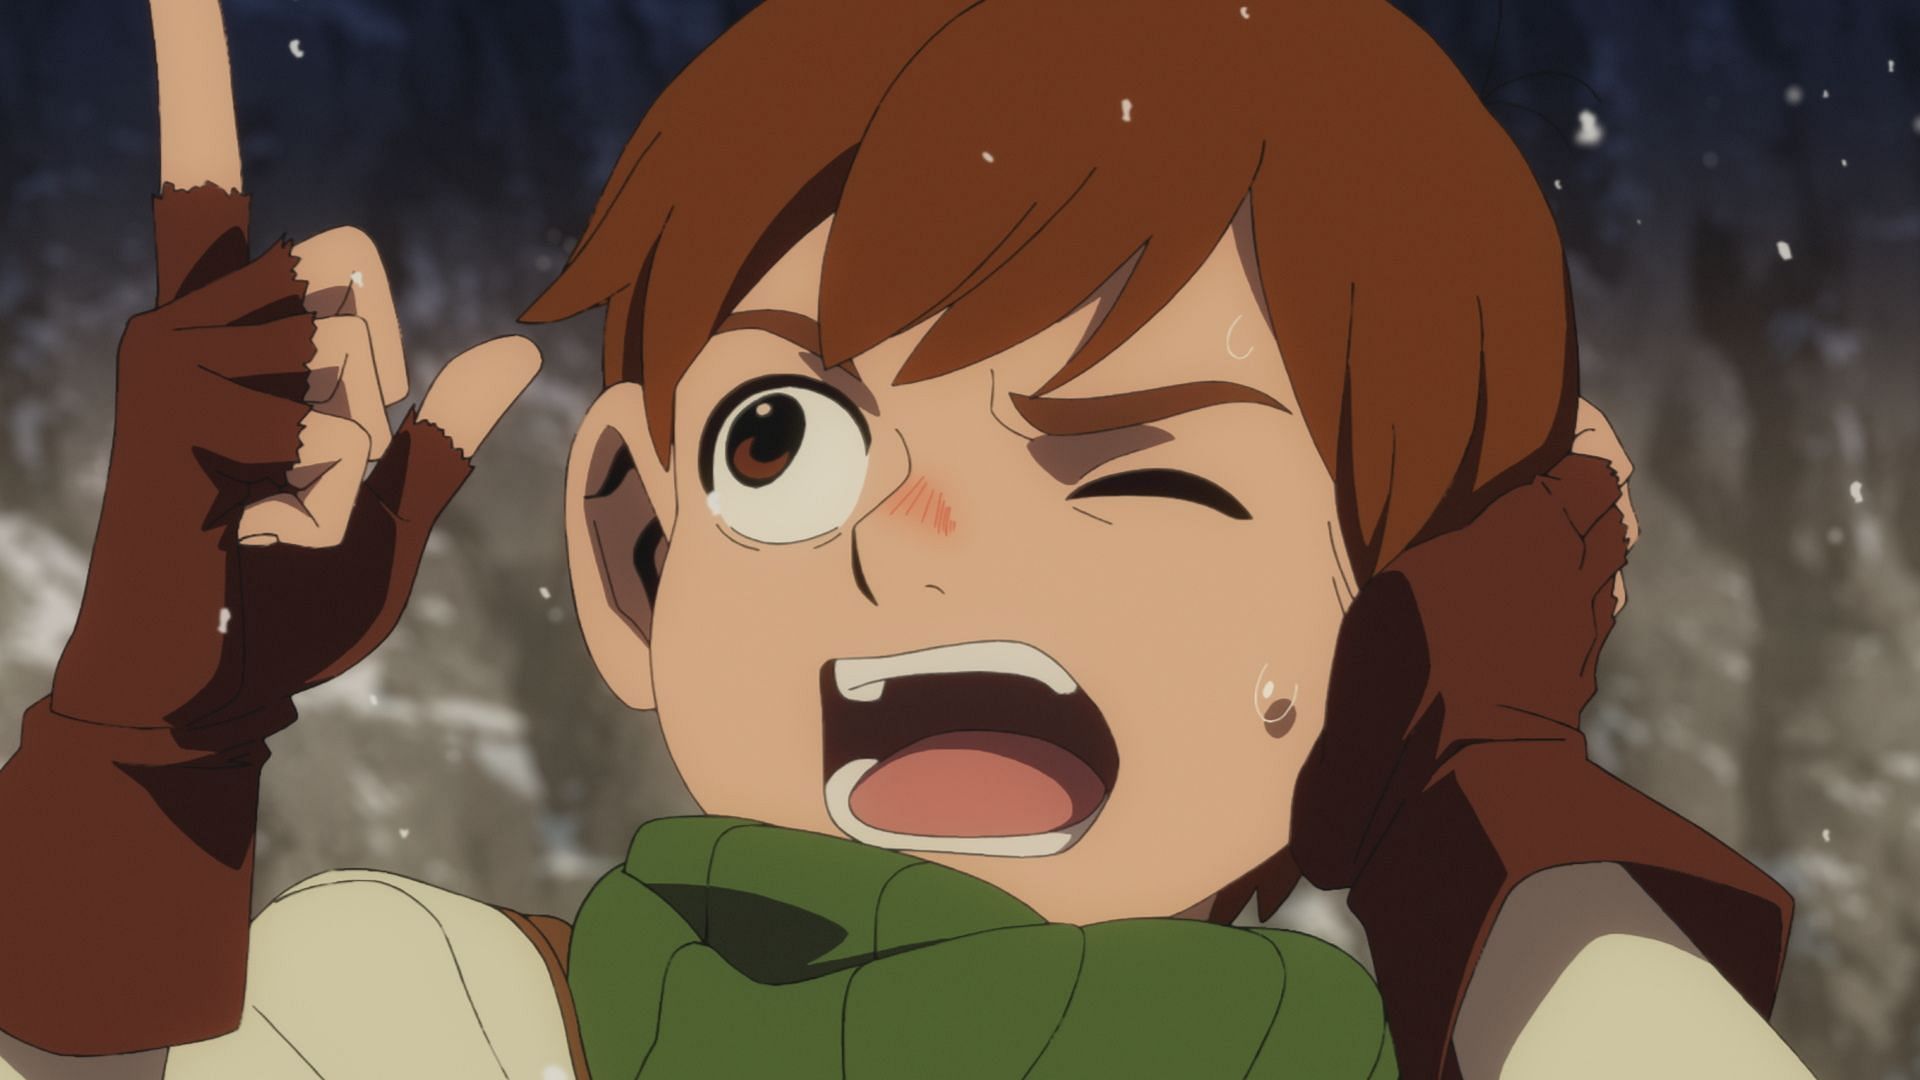 Chilchuck as shown in the anime (Image via Studio TRIGGER)